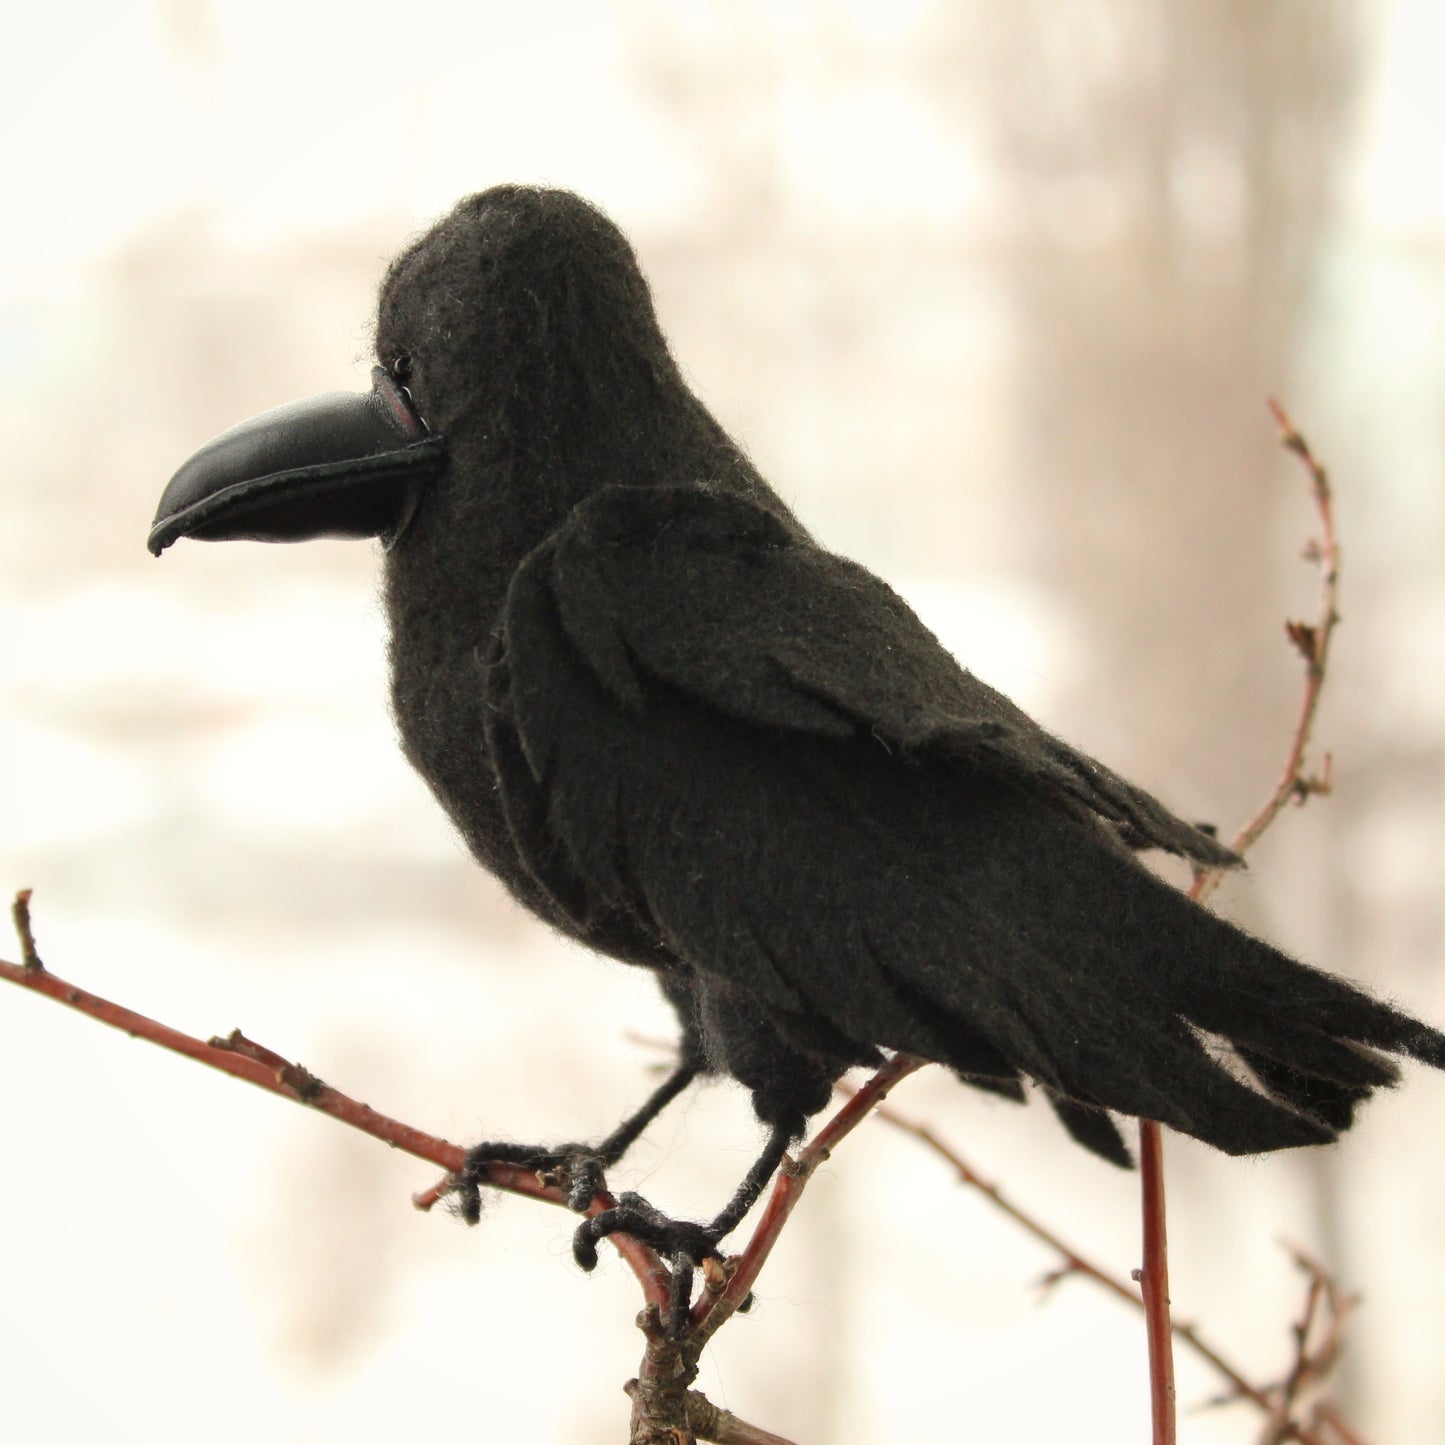 Crow sewing pattern, felt black Raven pattern